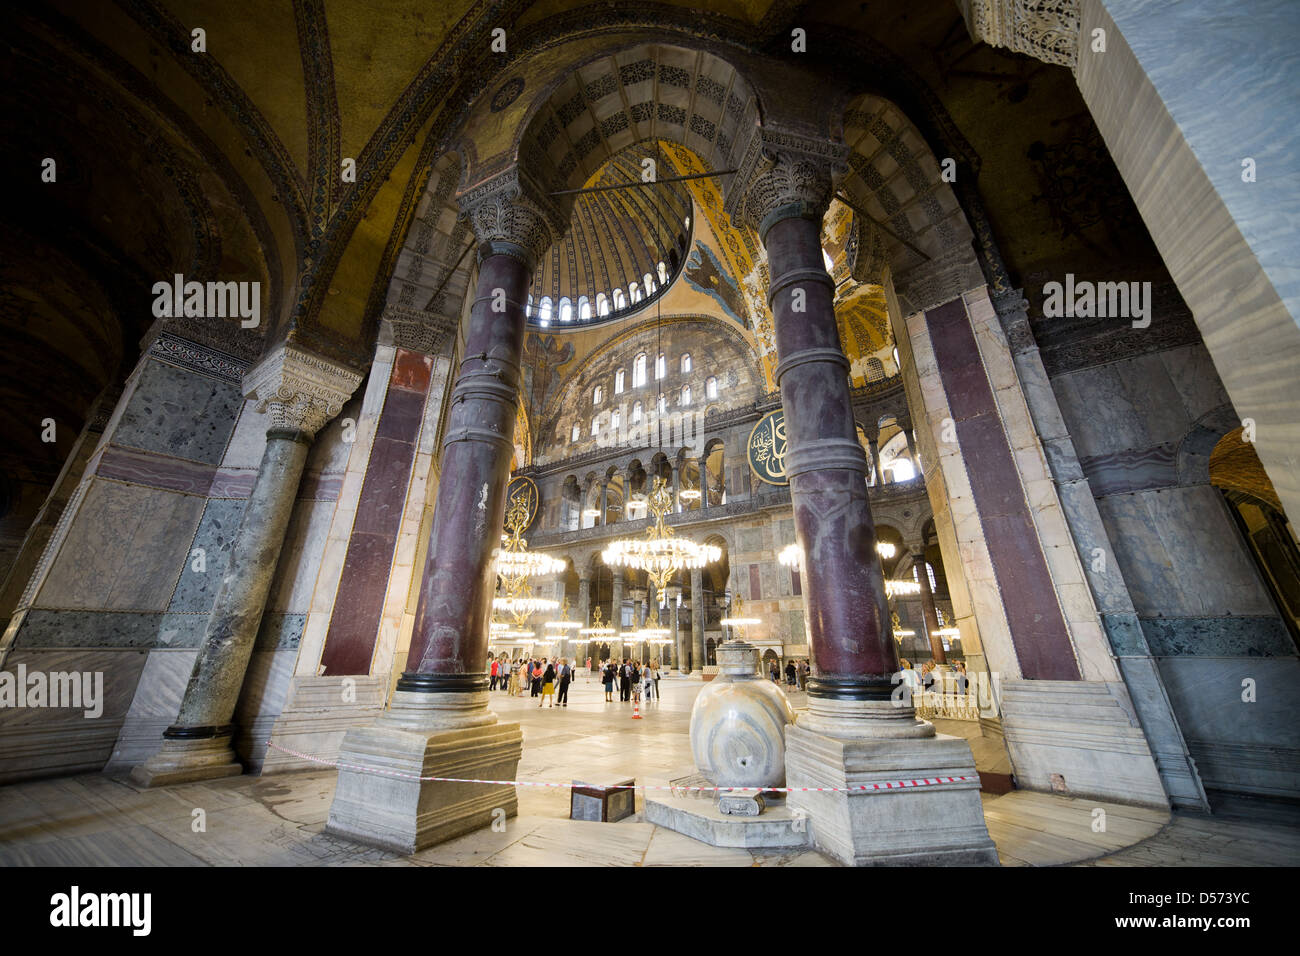 Hagia Sophia (Chiesa della Santa saggezza o Ayasofya in turco) interni ad Istanbul in Turchia. Foto Stock